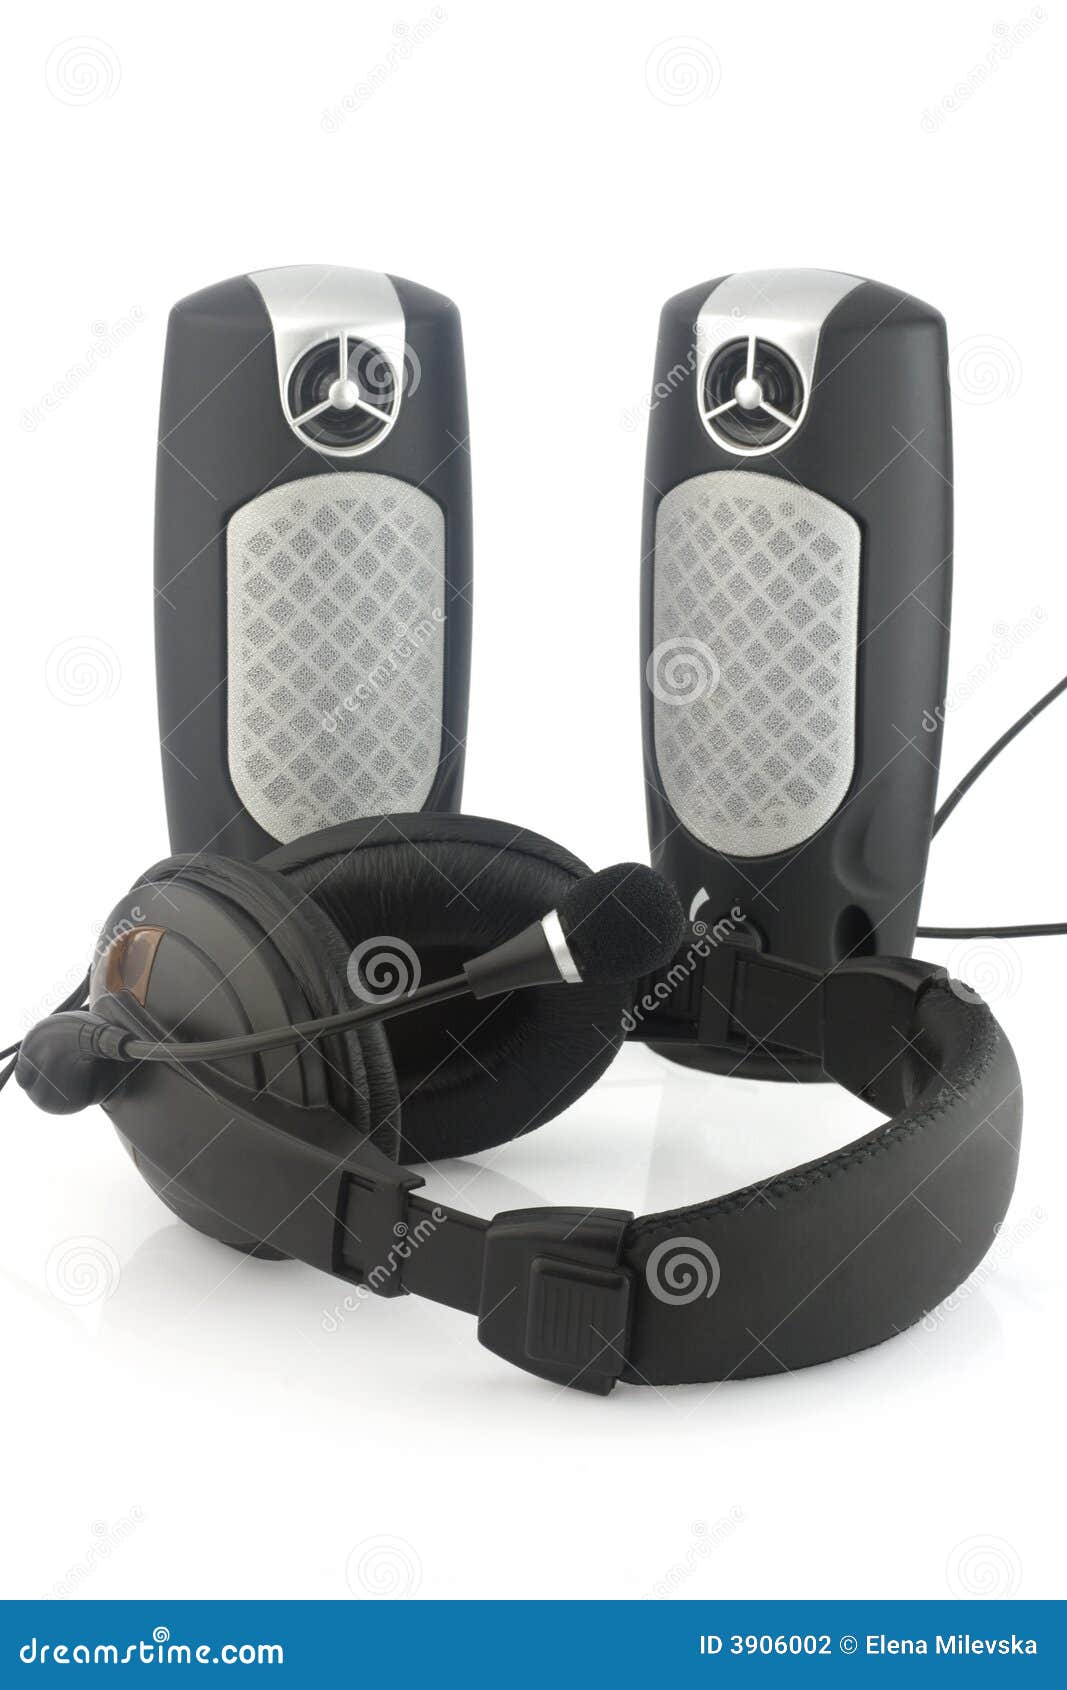 earphone and speakers